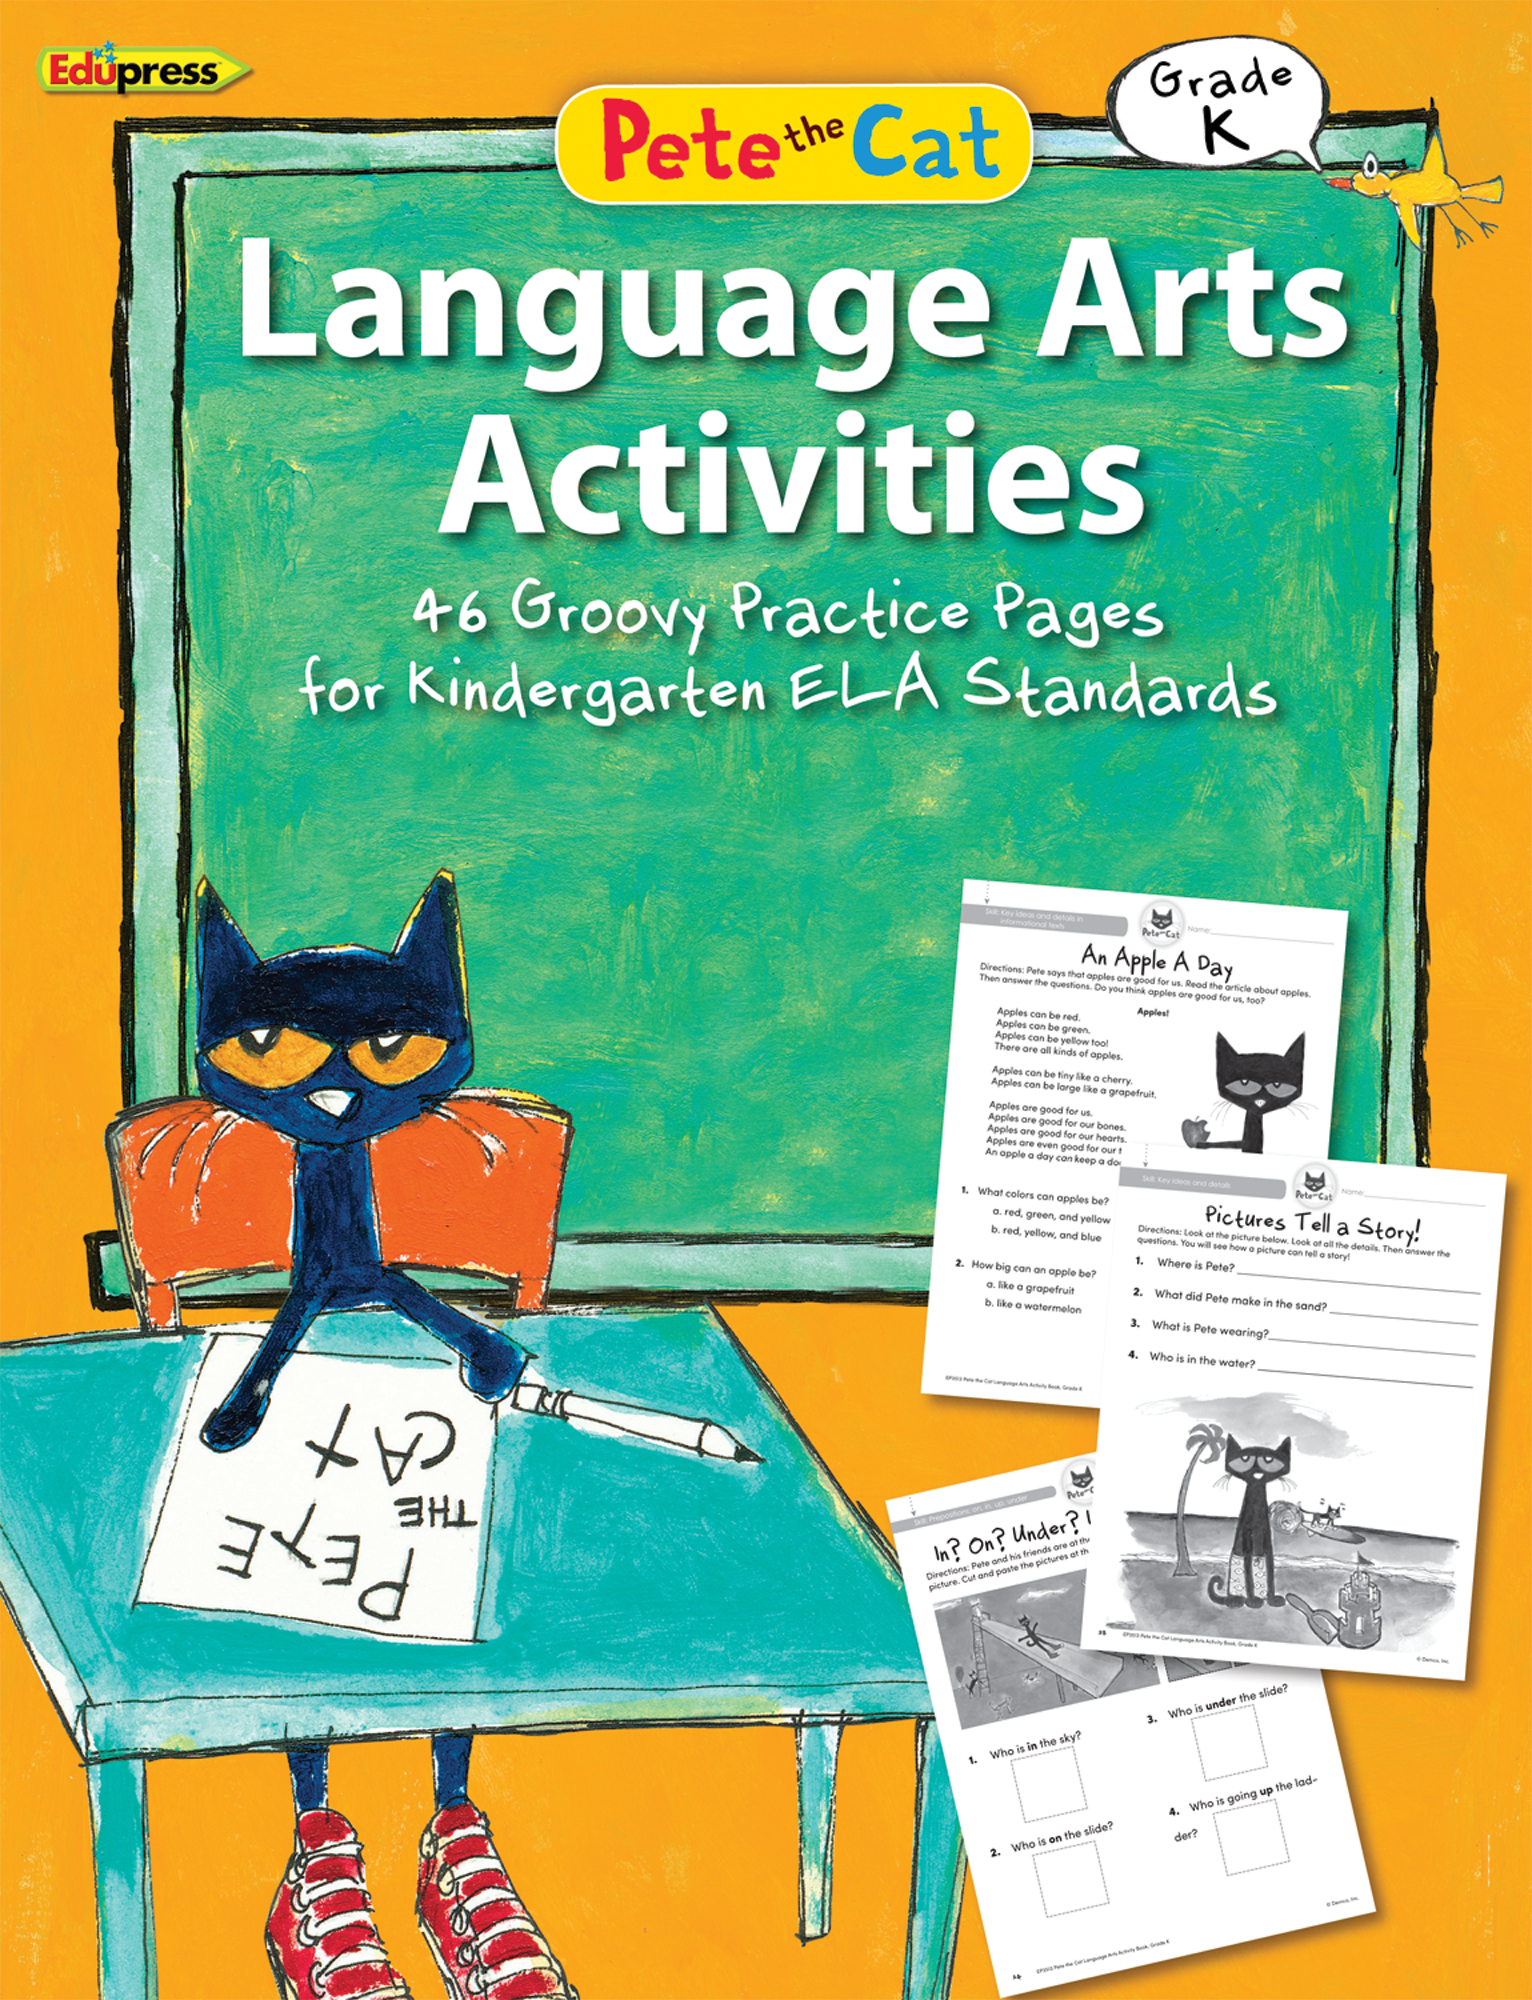 Pete the Cat Language Arts Activities Grade K TCR63513 Teacher